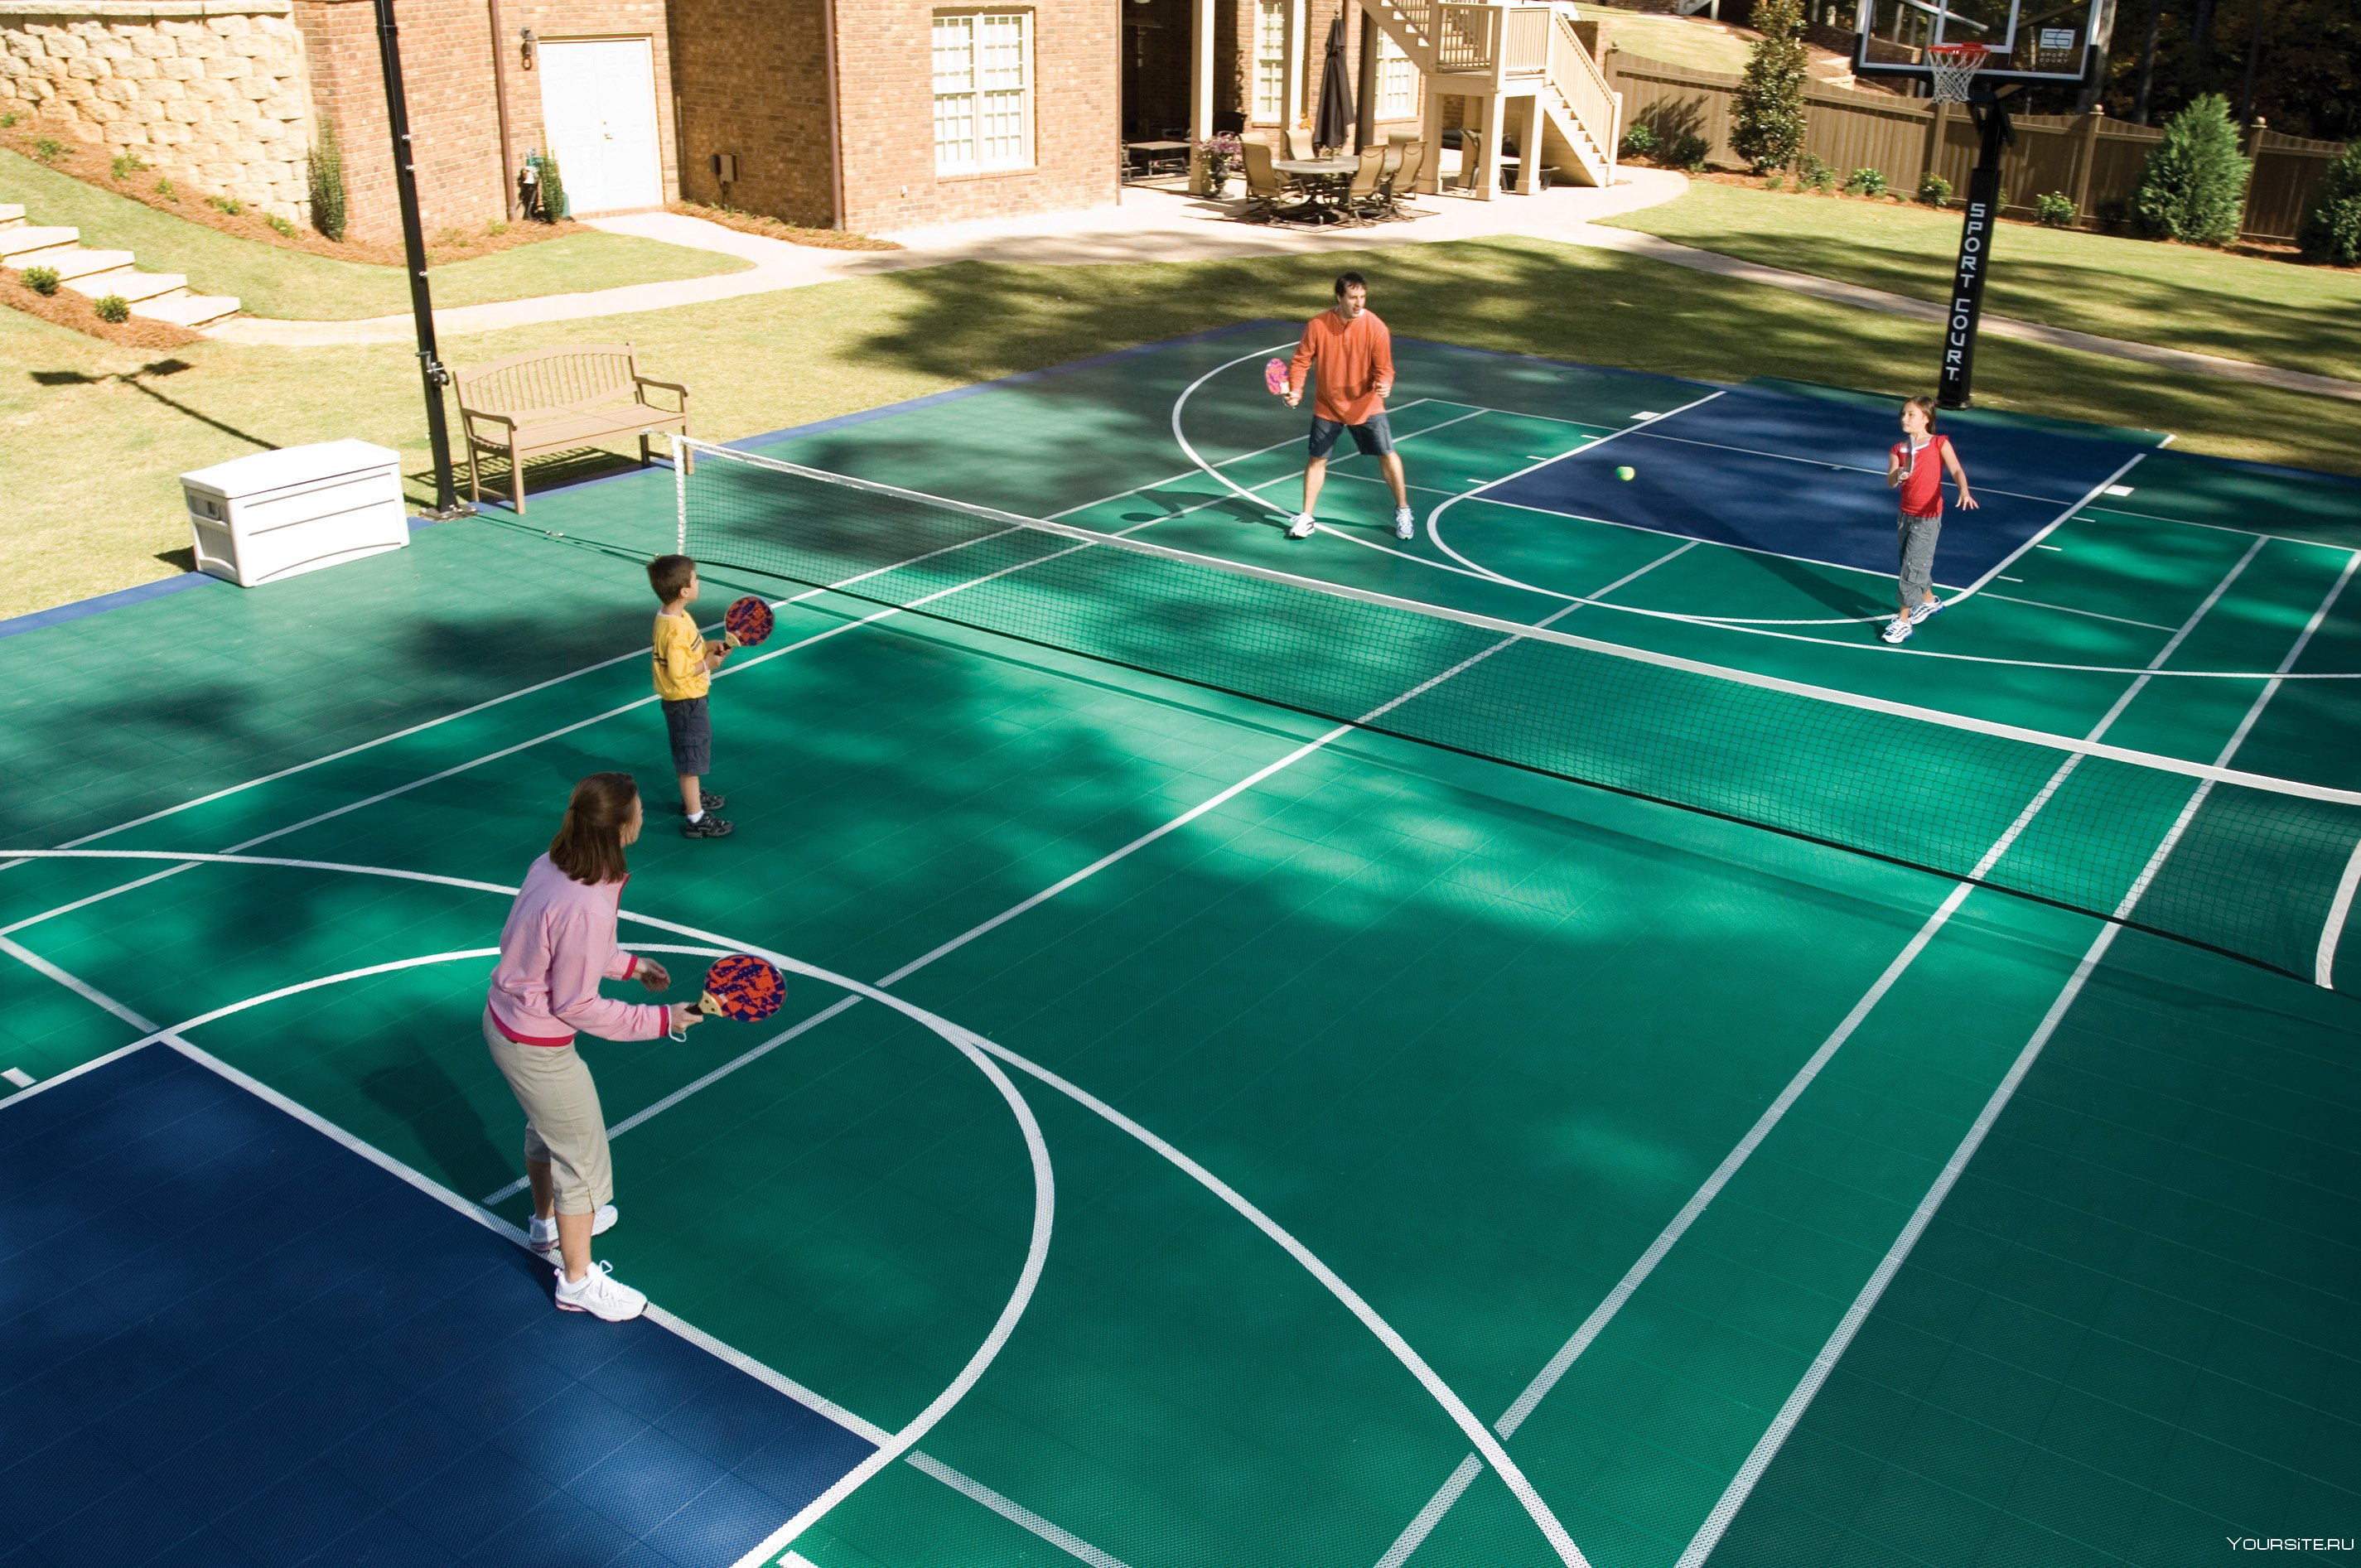 Потенциальной площадки. Спортплощадка теннис-баскетбол. Спортивная площадка. Баскетбольная площадка. Теннисный корт и баскетбольная площадка.